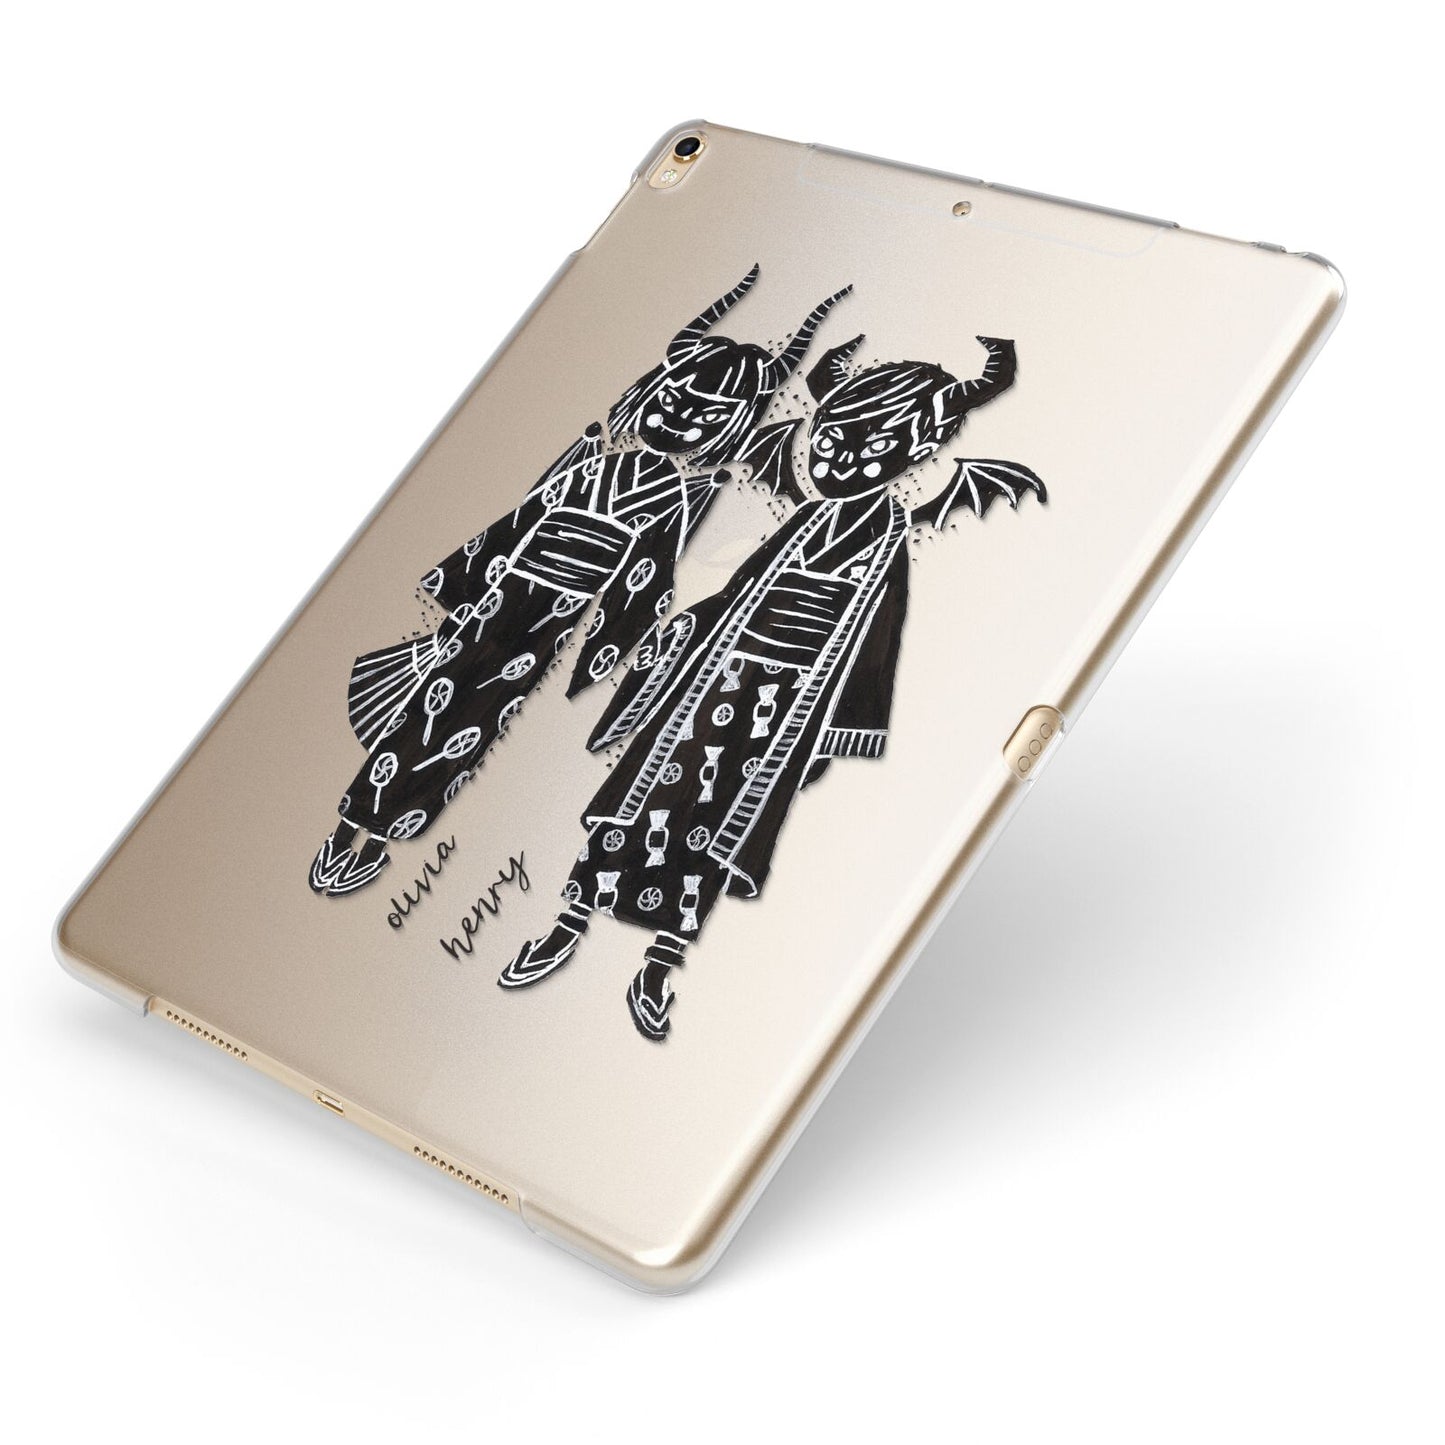 Kimono Devils Apple iPad Case on Gold iPad Side View